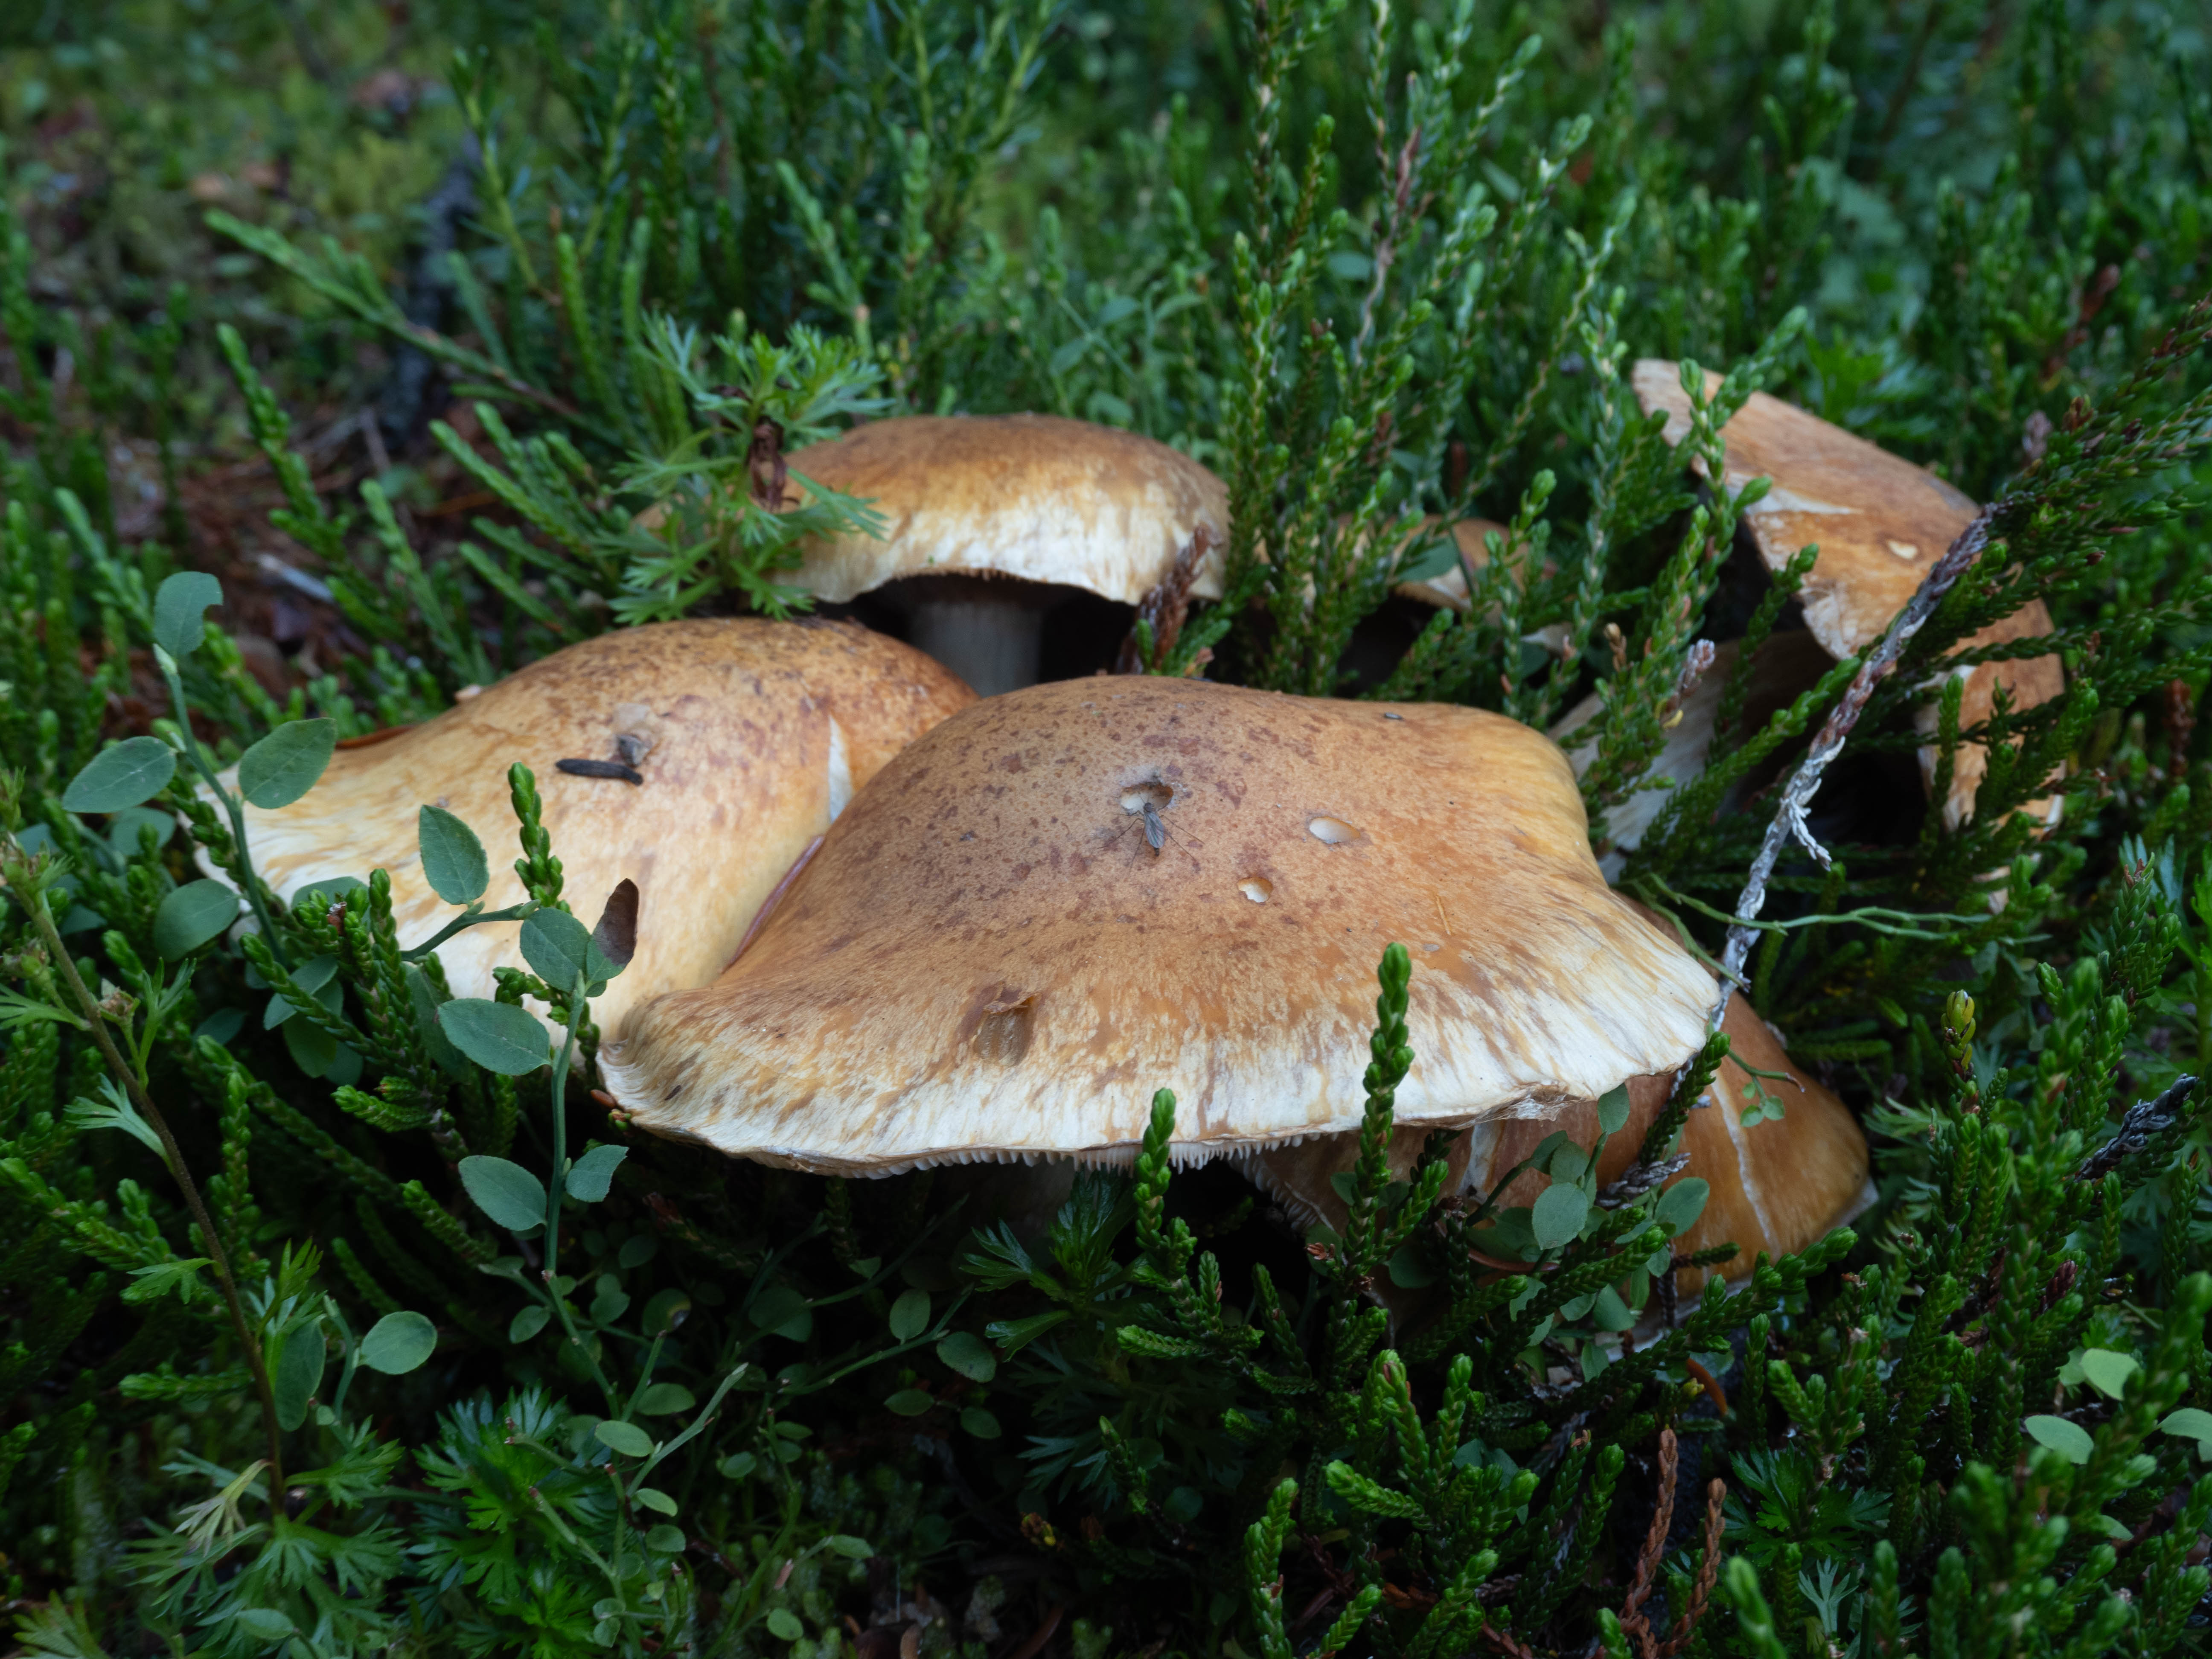 A big mushroom on the trail